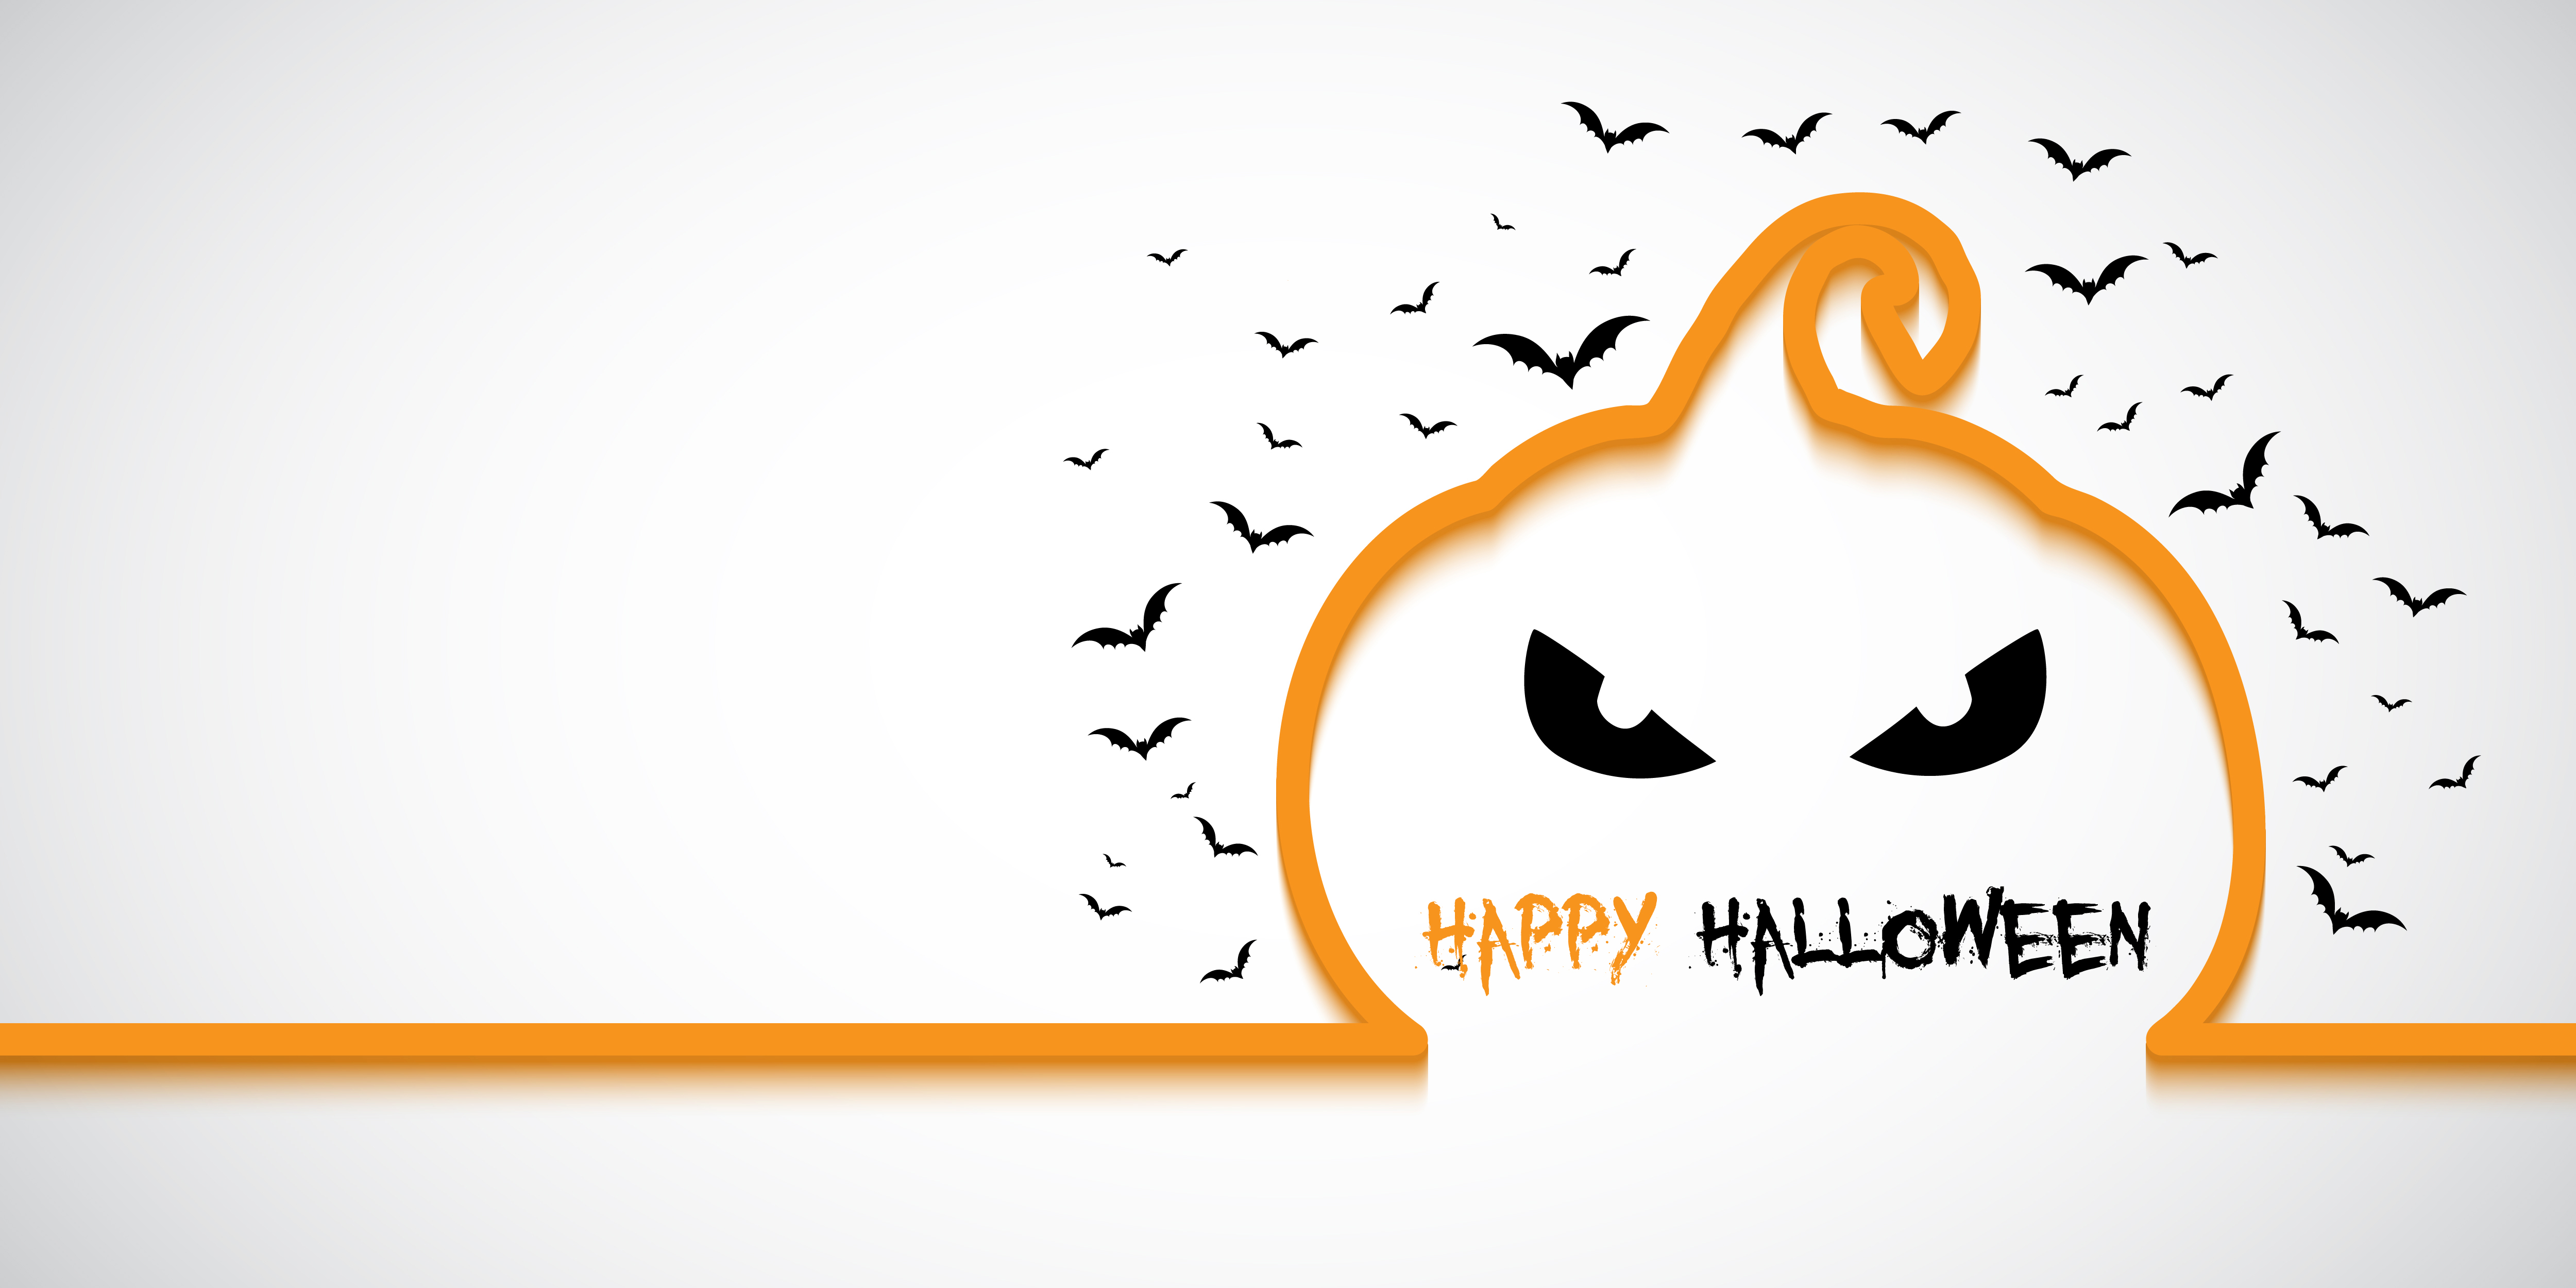 Download Simple Halloween banner with pumpkin outline - Download ...